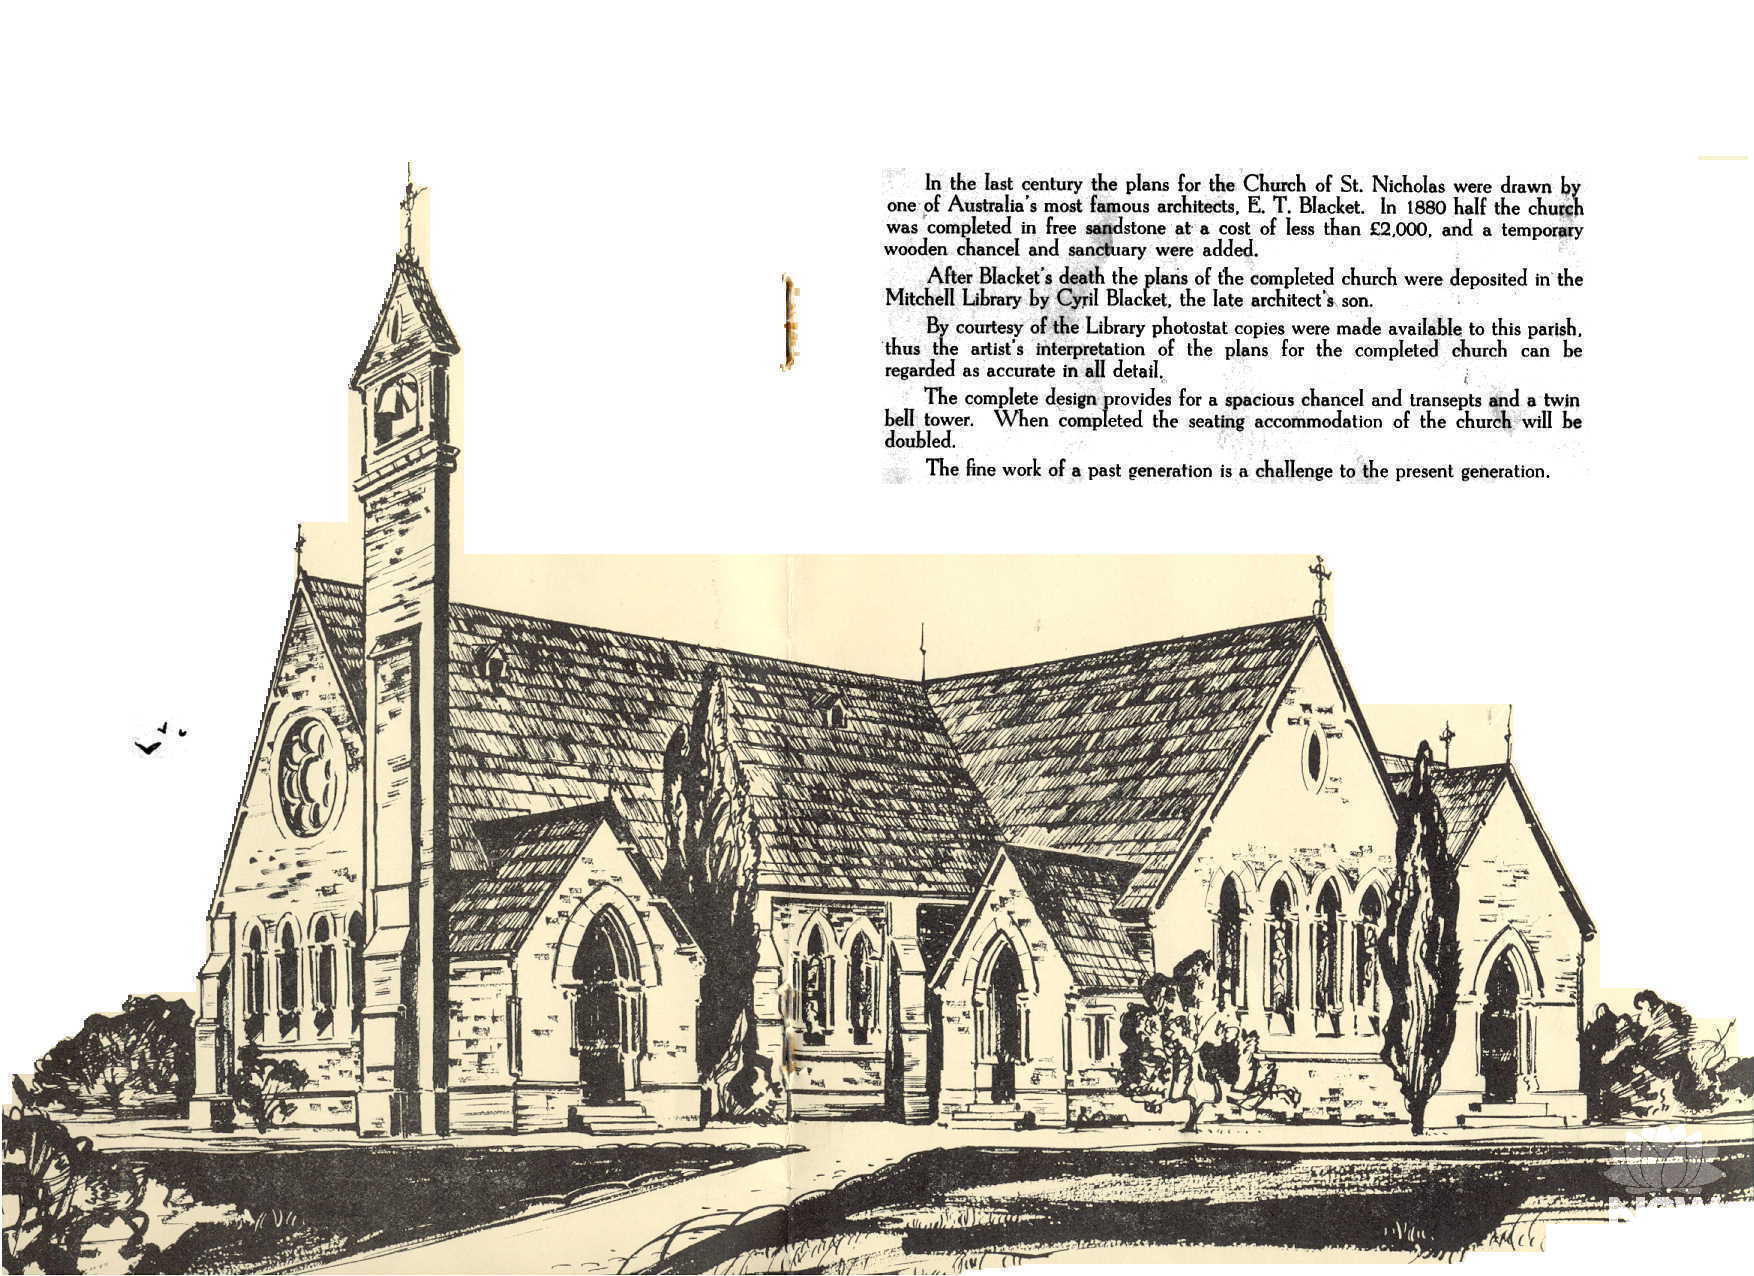 St Nicholas' Church drawing from original plans